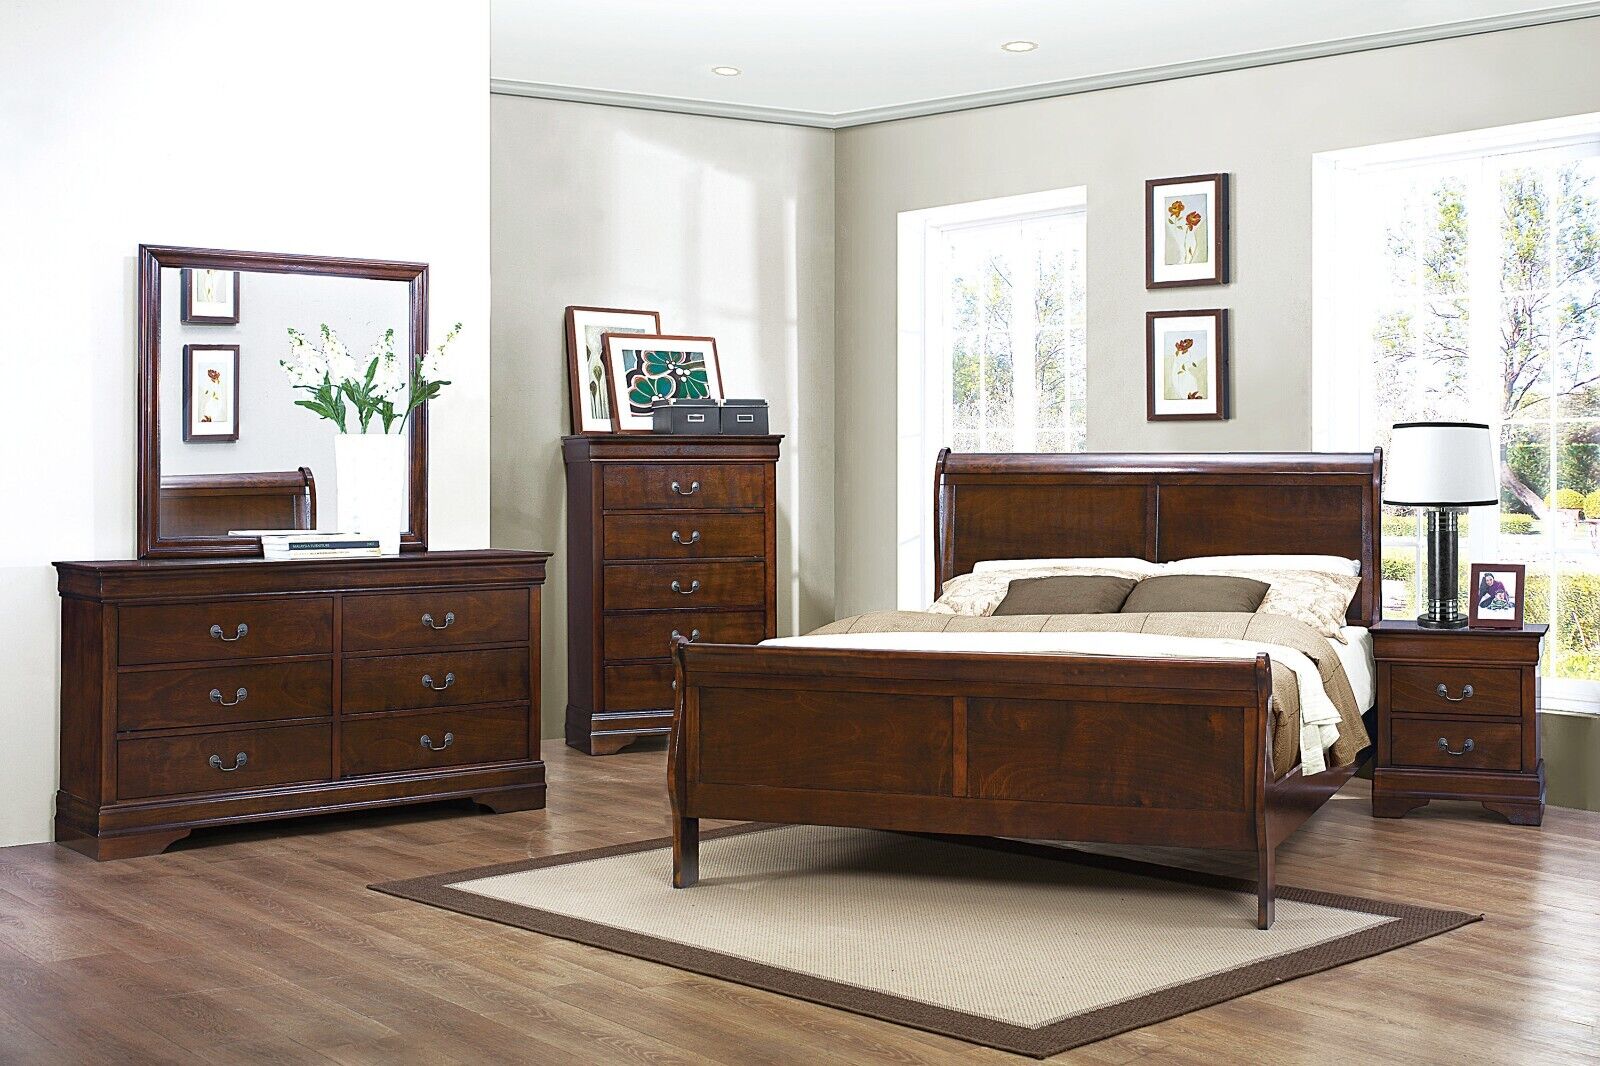 Esofastore Brown Cherry Finish 5pc Bedroom Set Louis Phillipe Full Bed Dresser Chest Mirror Nightstand Wooden Furniture